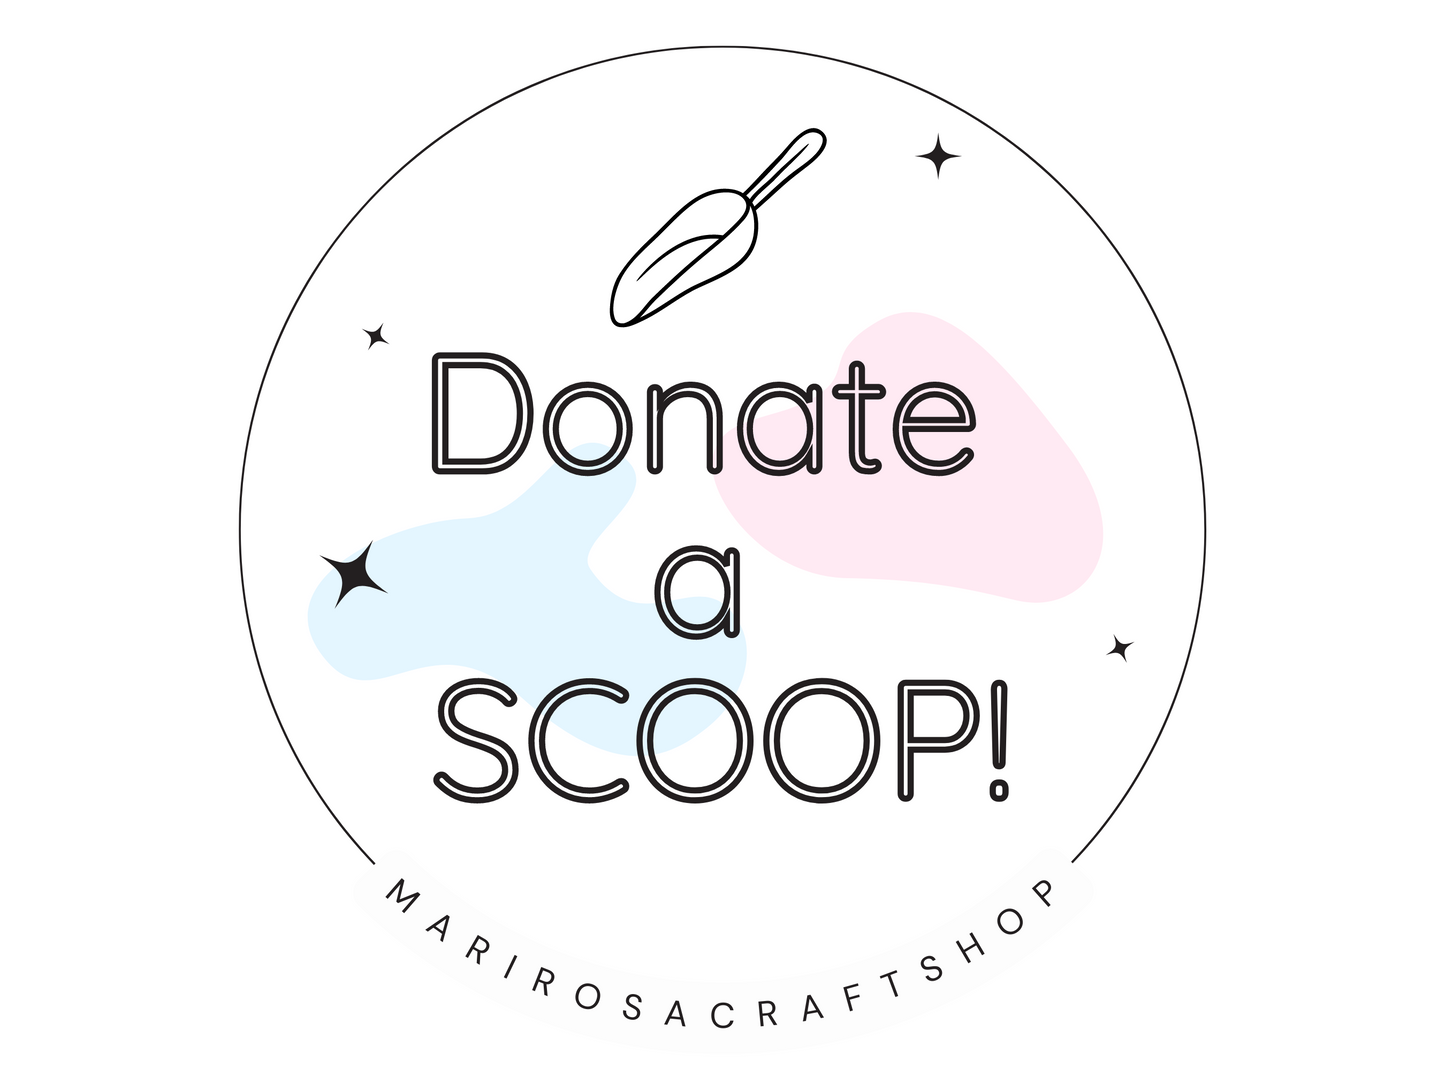 Donate a Scoop from the Treasure Box - MariROsa Craft Shop